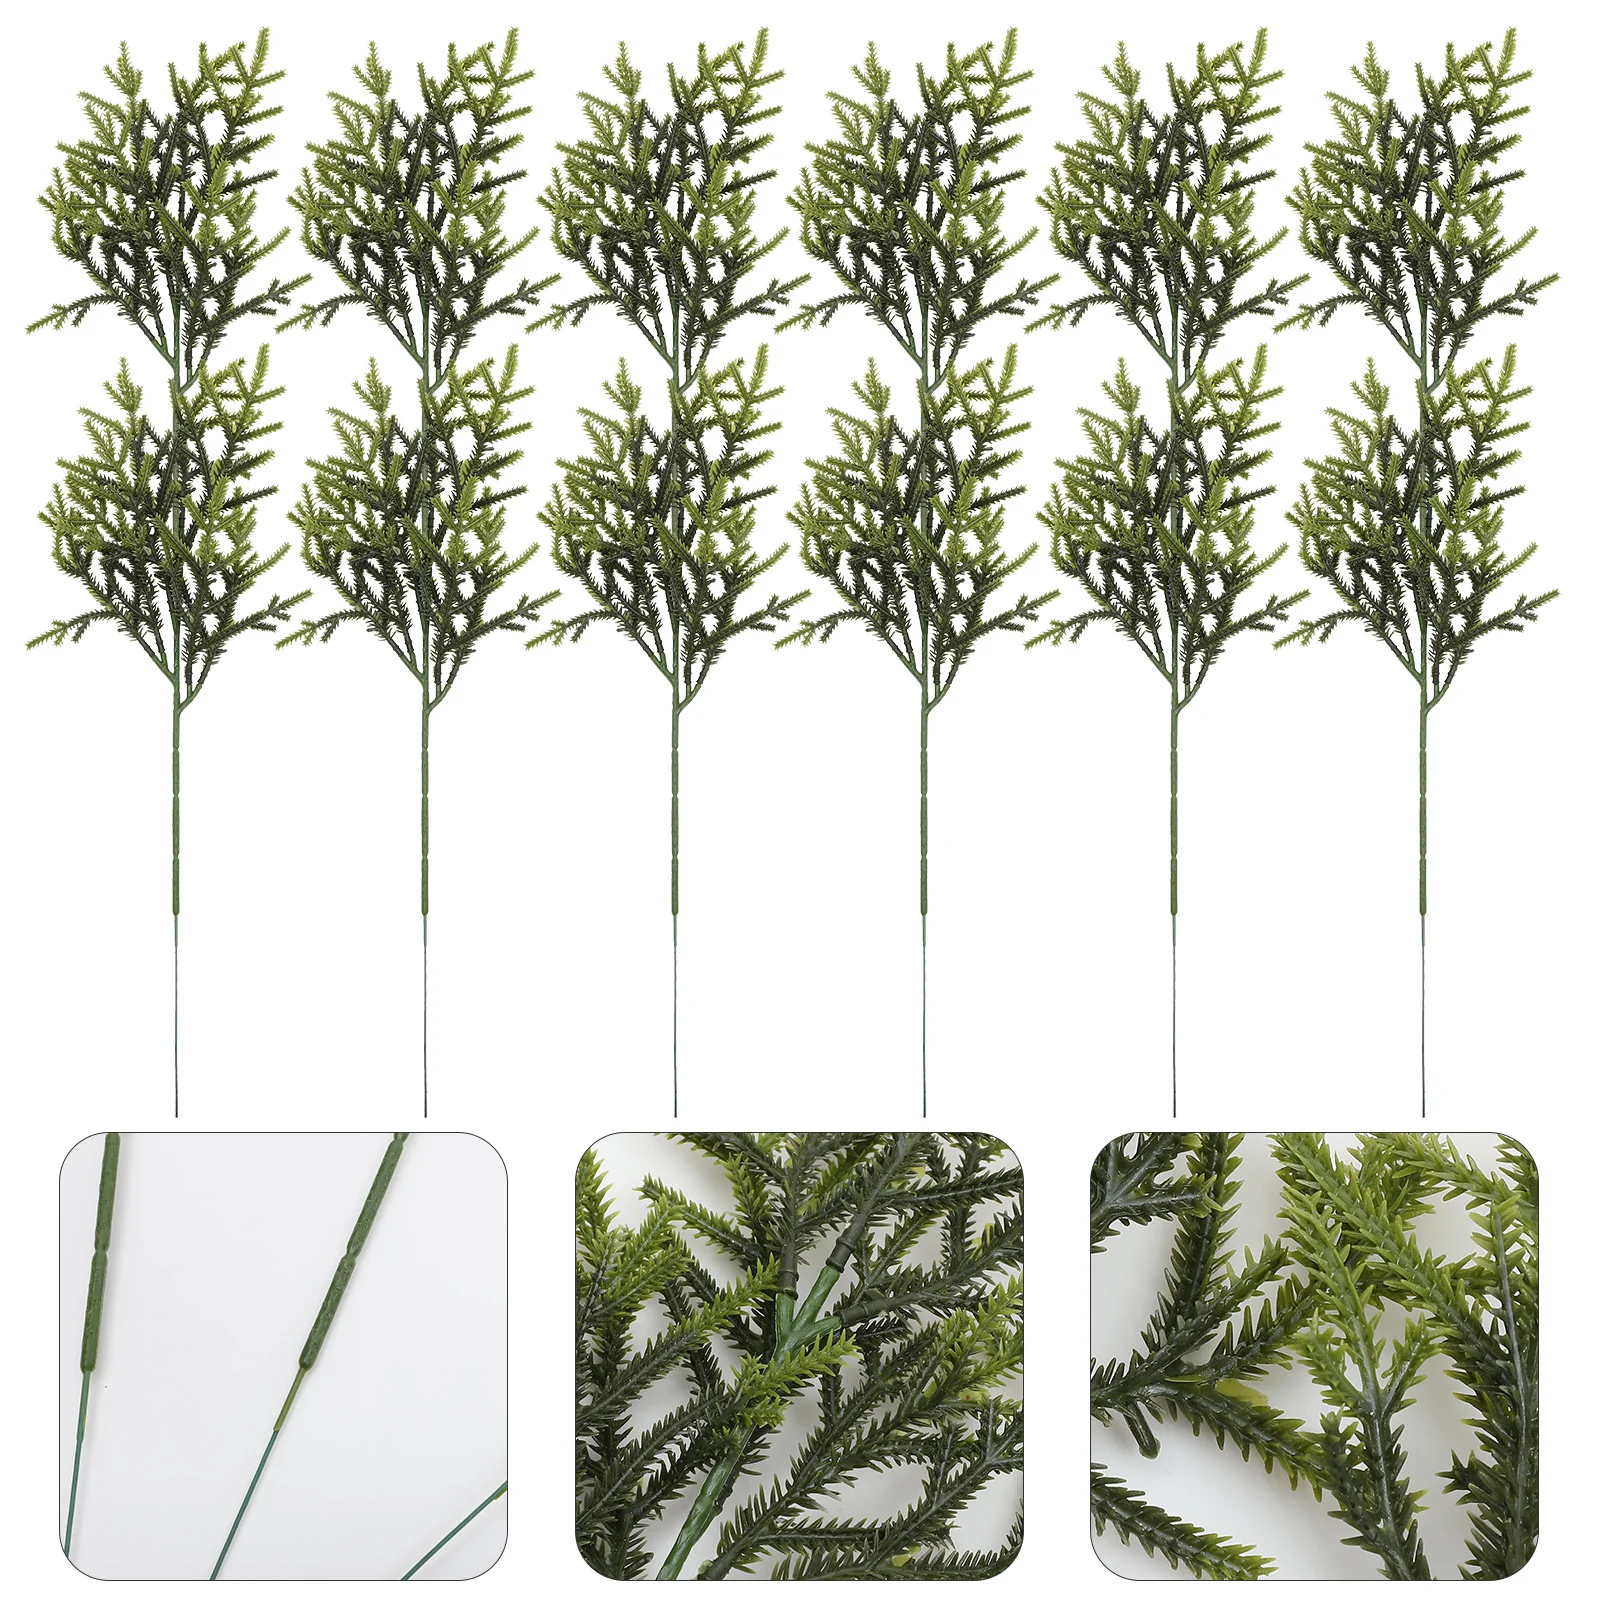 

12 Pcs Artificial Leaves Ornament Garland Pine Needles Fake Chrismas Wreath Twigs Faux Stems Picks